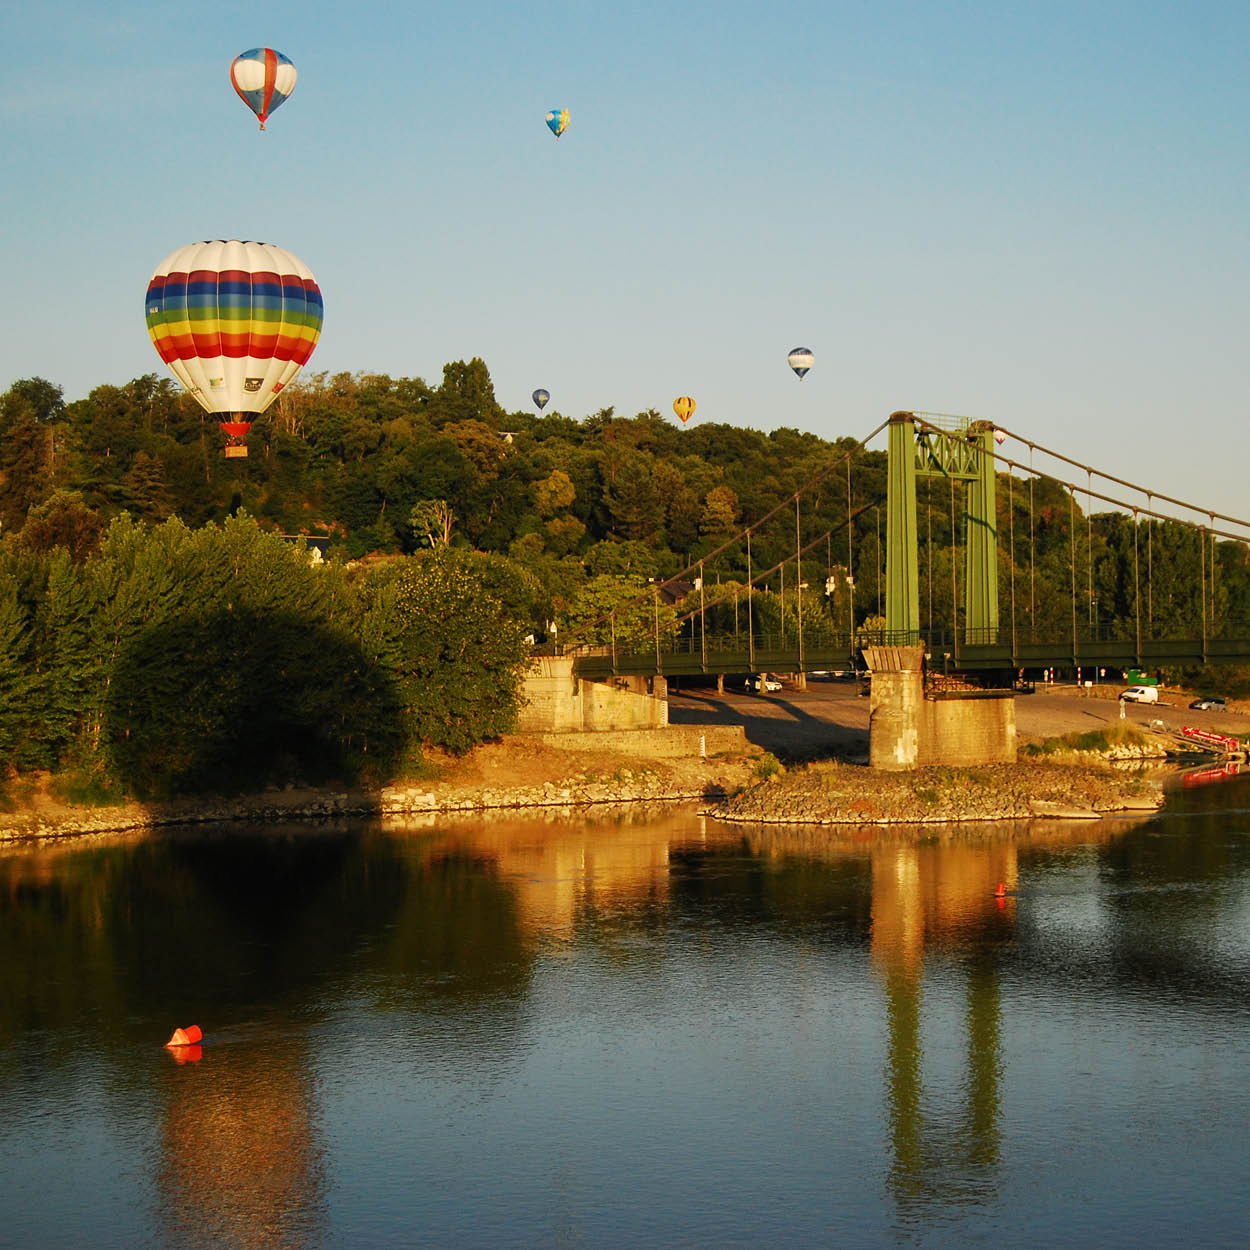 hot air balloon ride montgolfiere